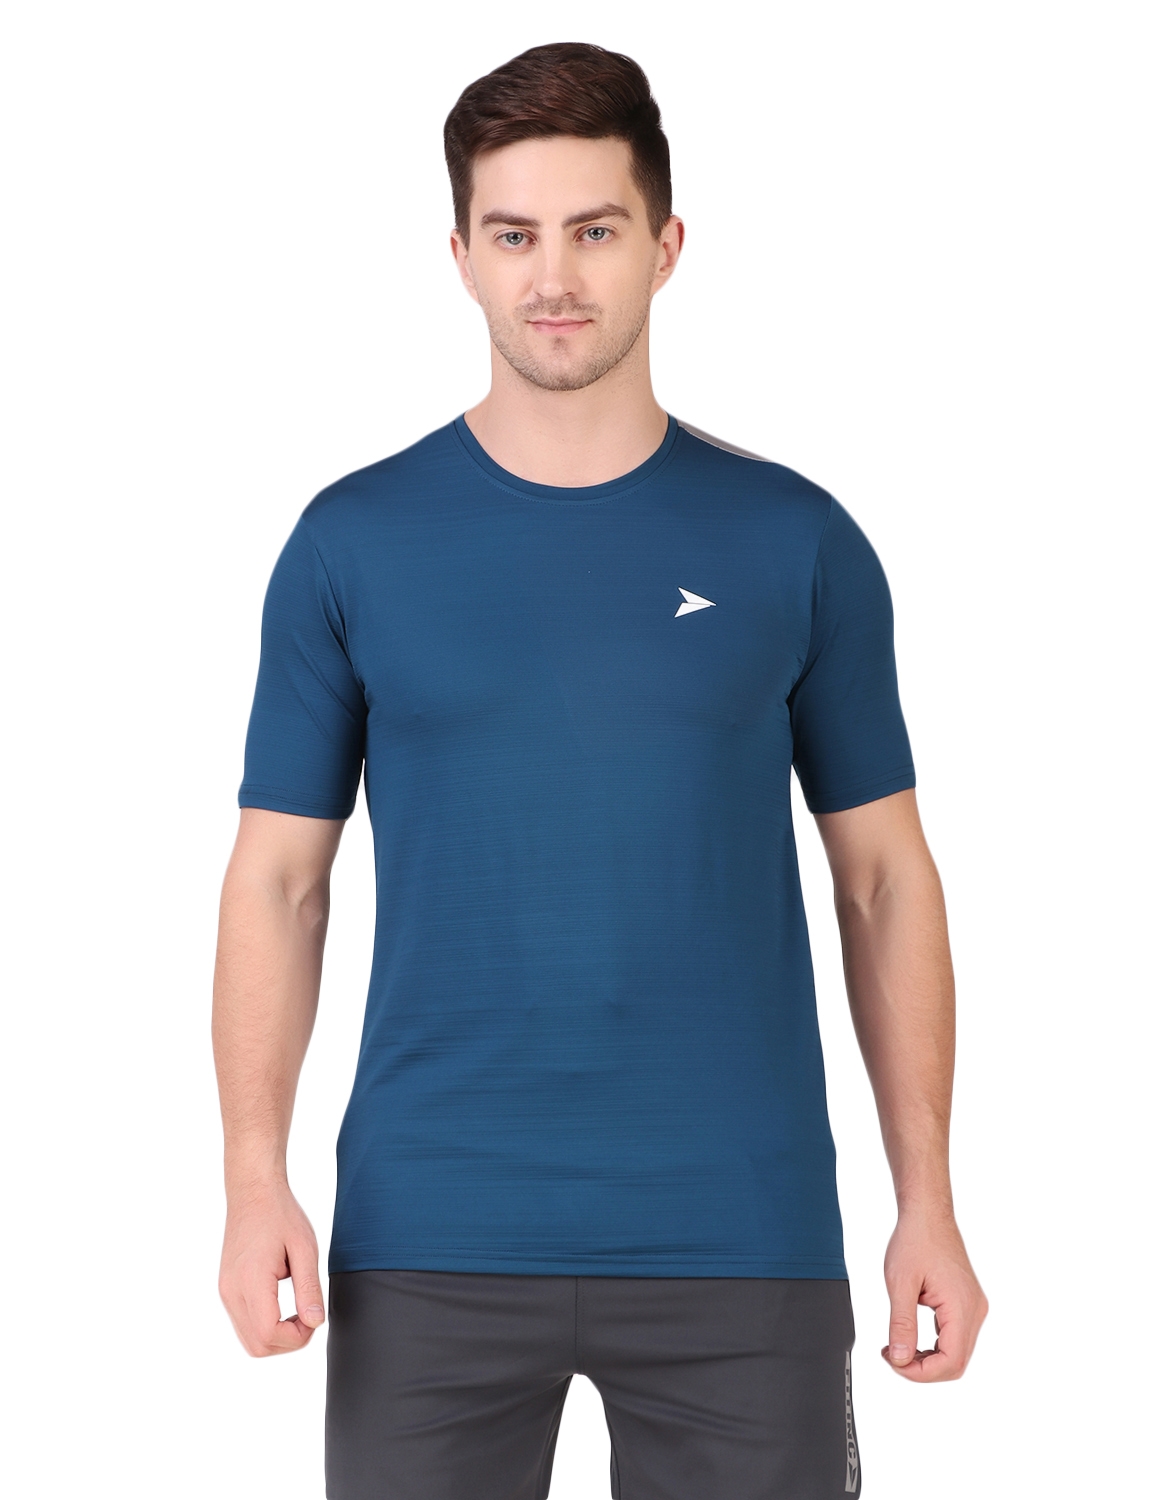 Fitinc | Fitinc Men's Round Neck Slimfit Gym & Active Sports Airforce T-Shirt